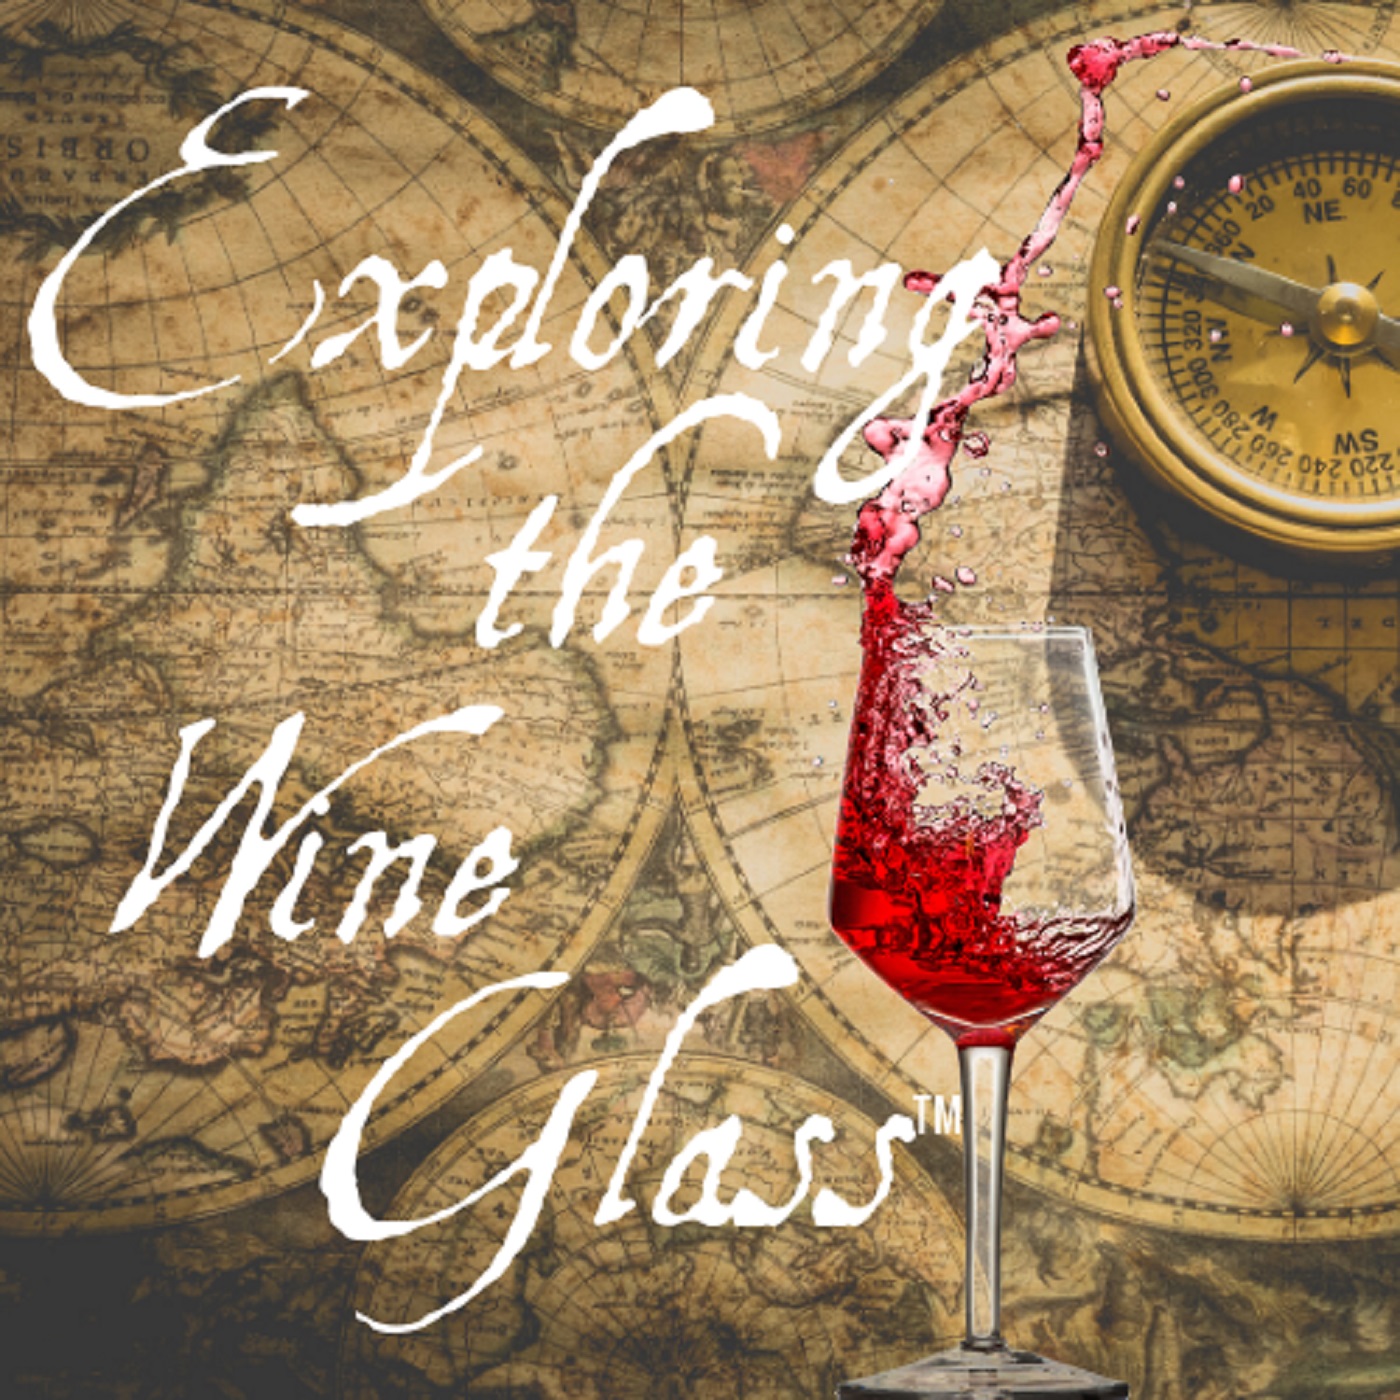 Exploring the Wine Glass